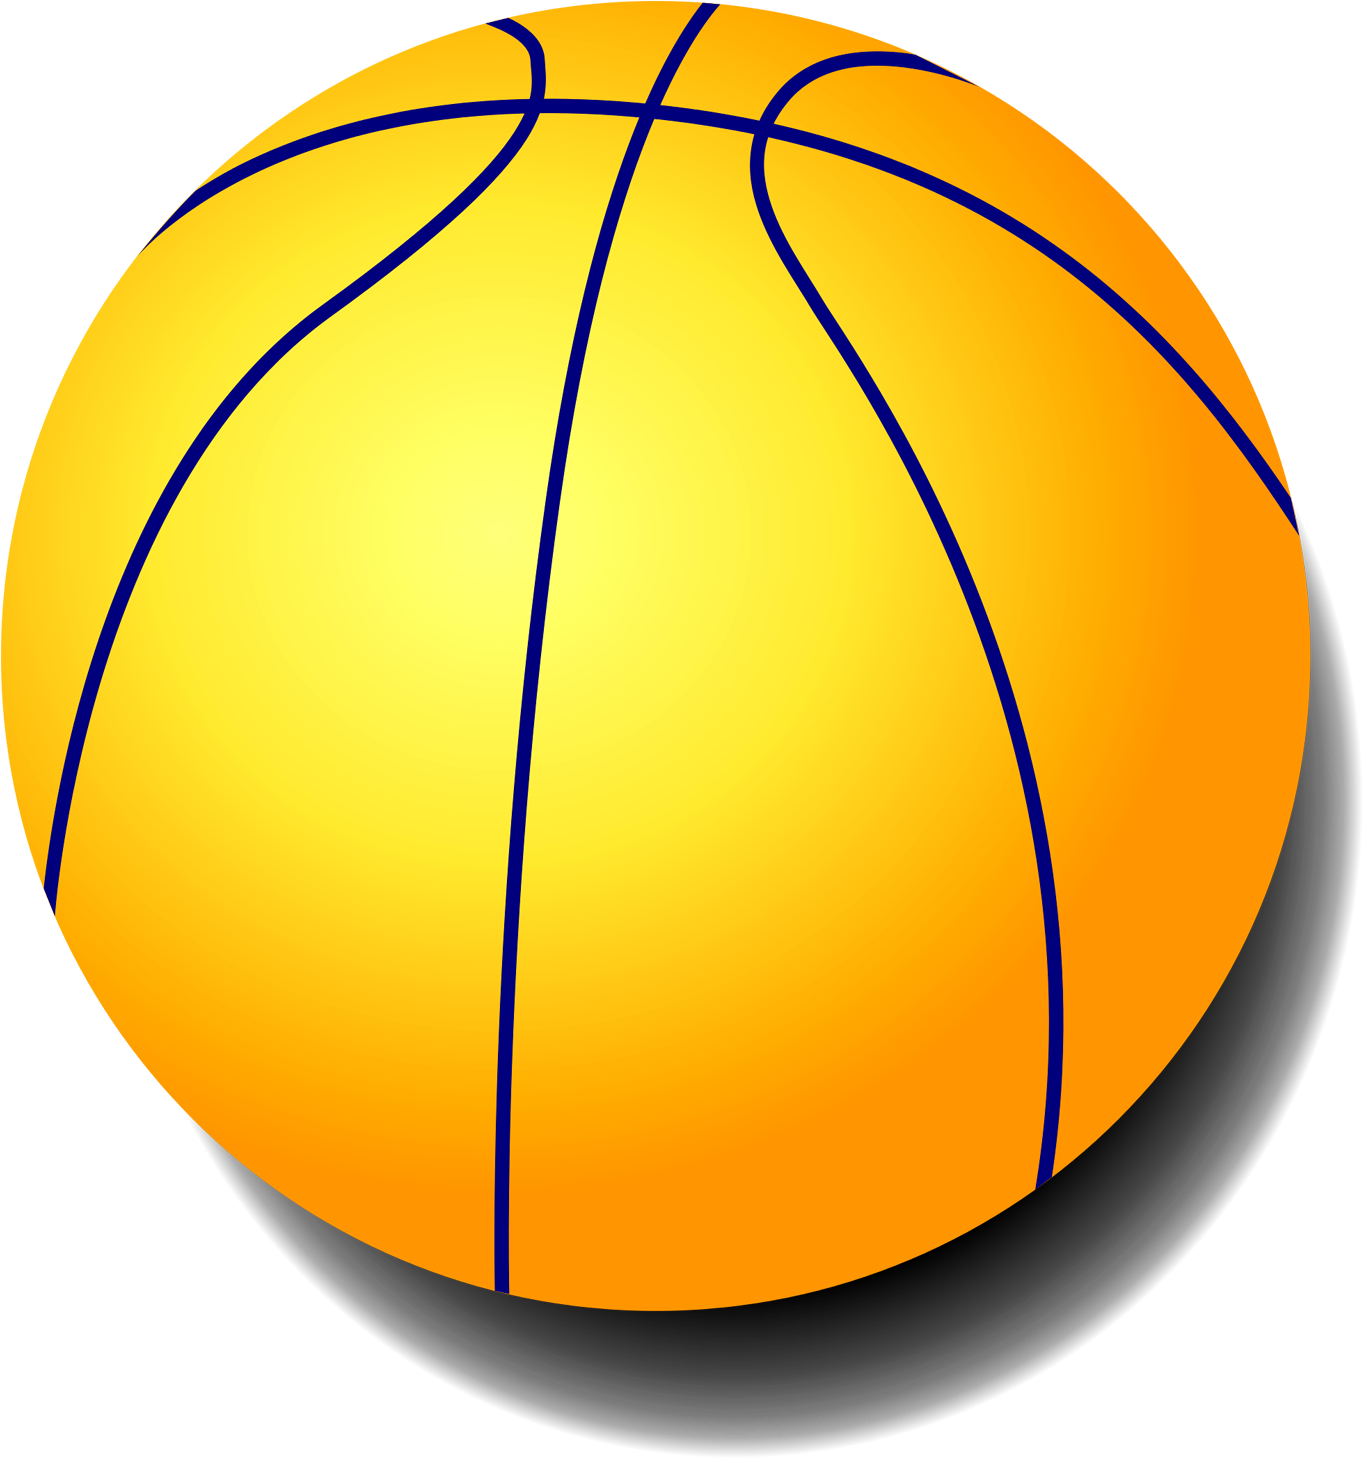 Demix Basketball Png Image Transparent Background - Basketball Ball (1484x1587), Png Download